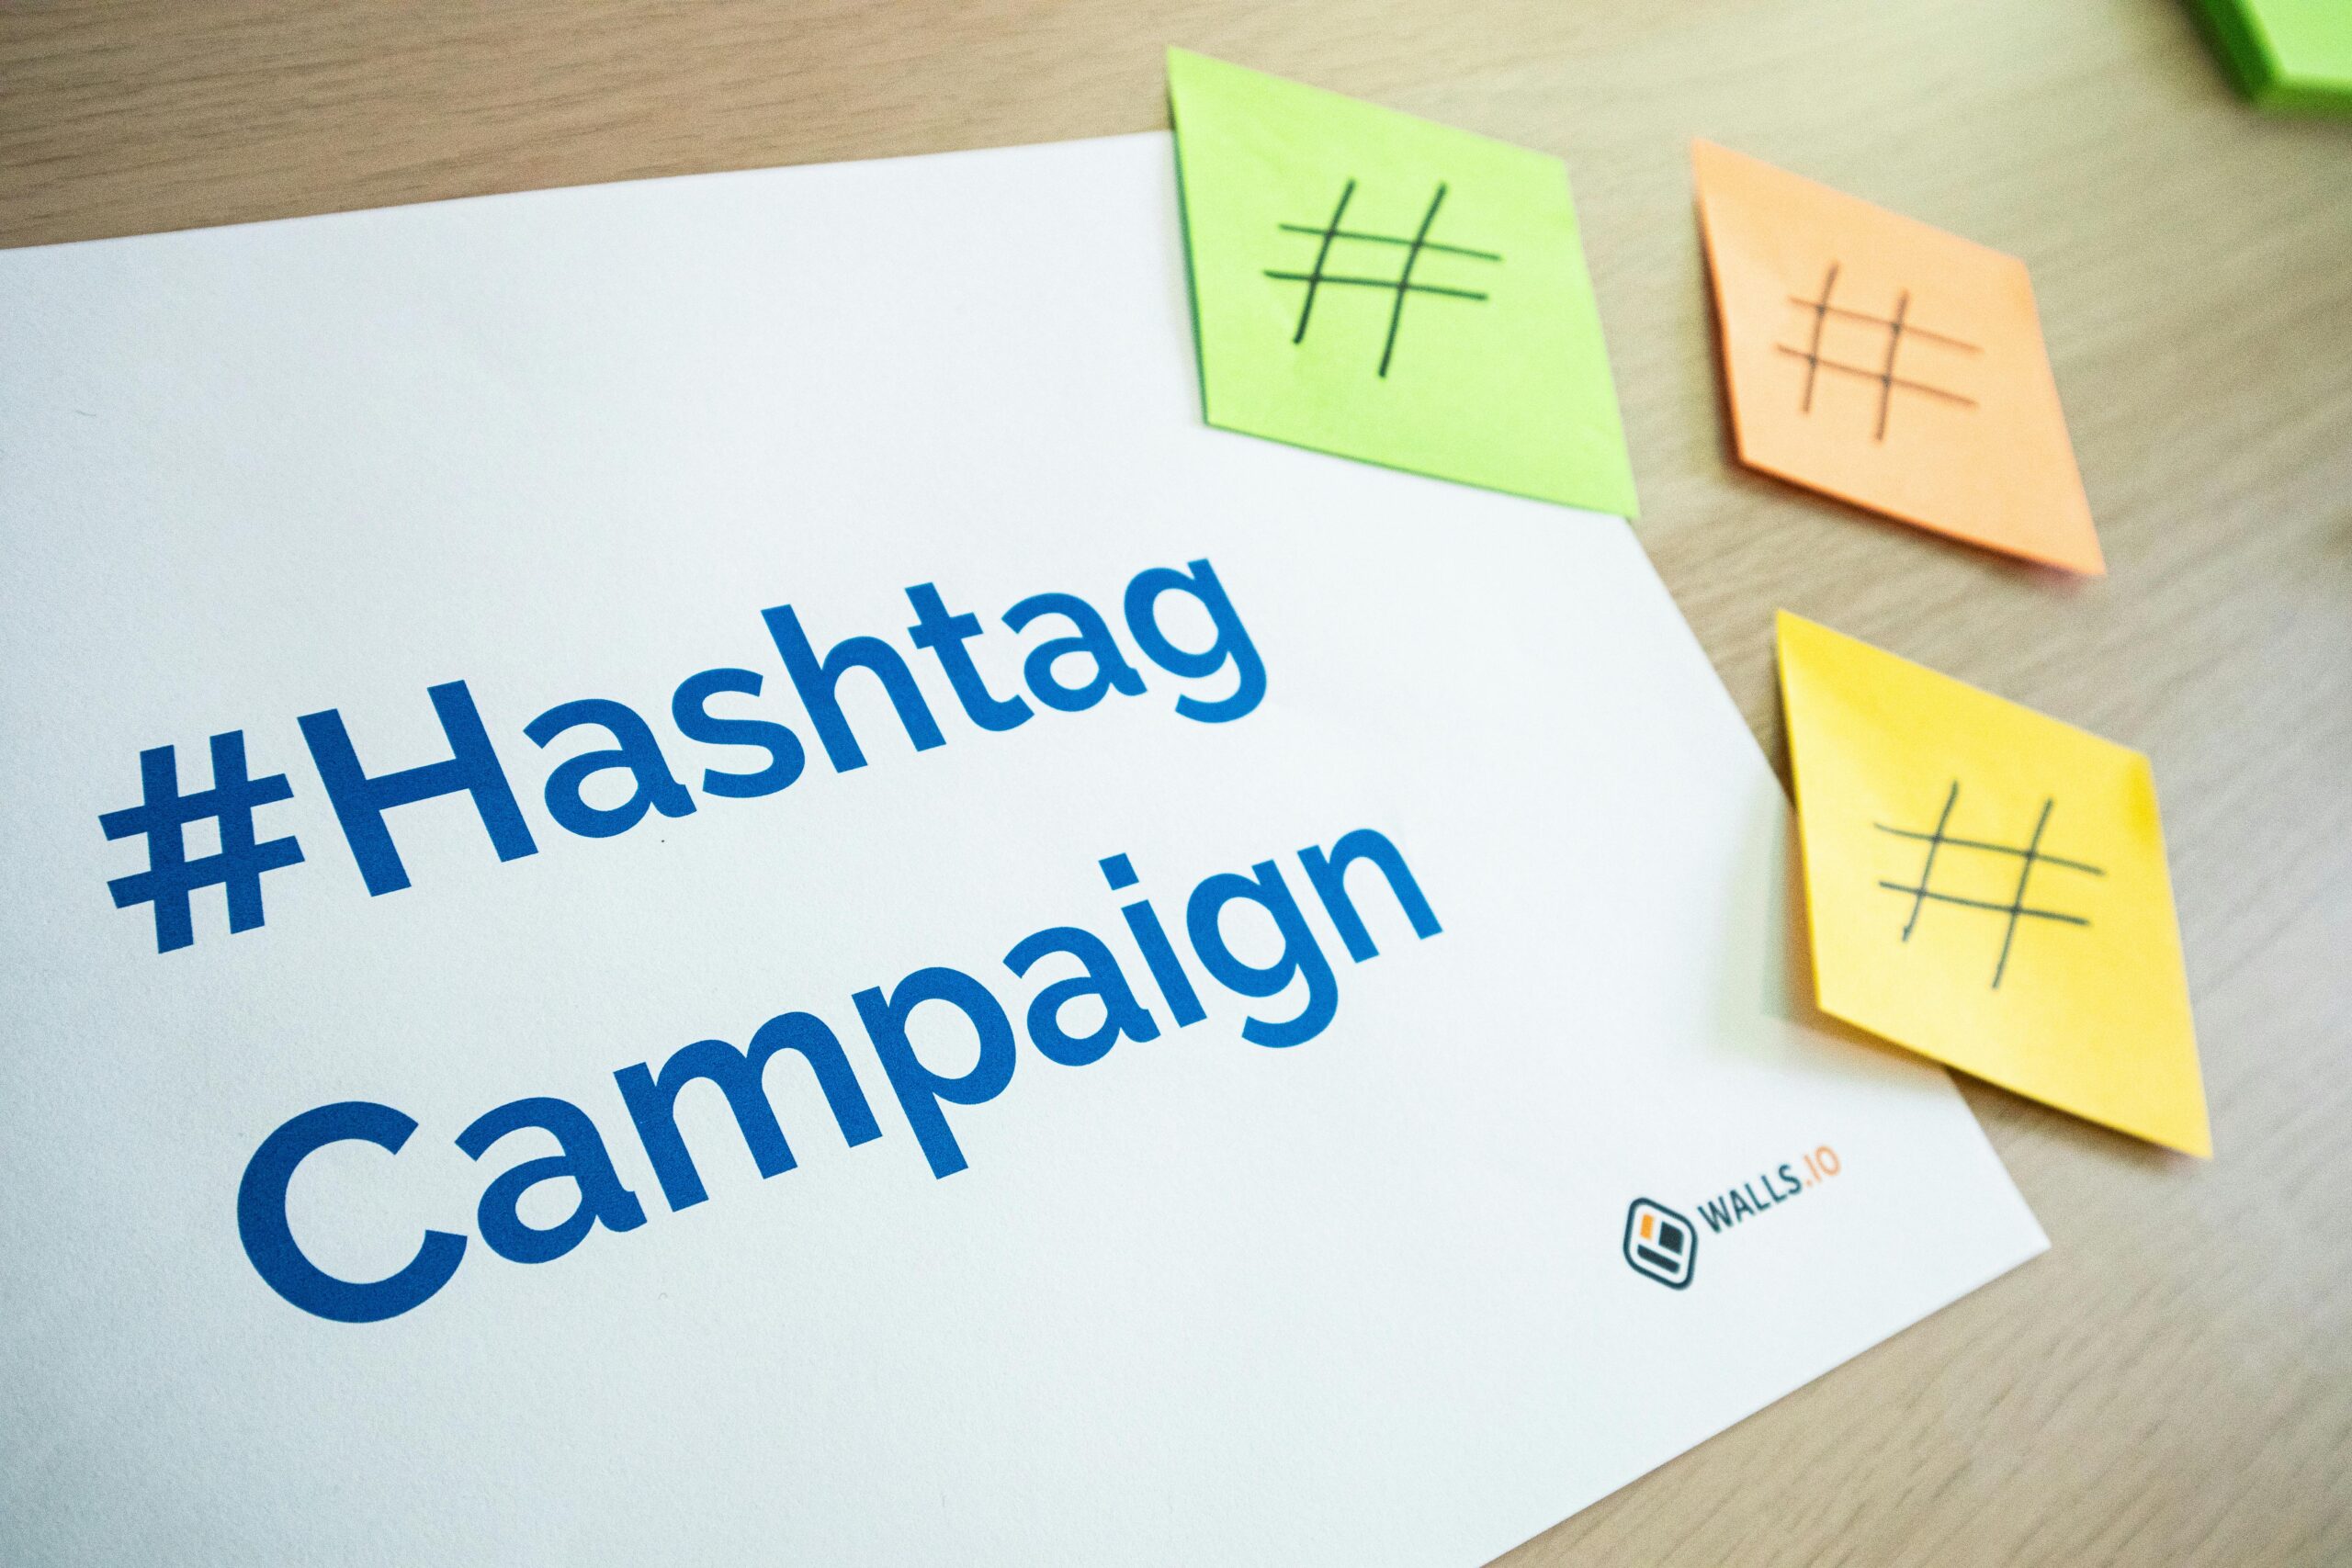 Hashtag Campaign Text on Desk